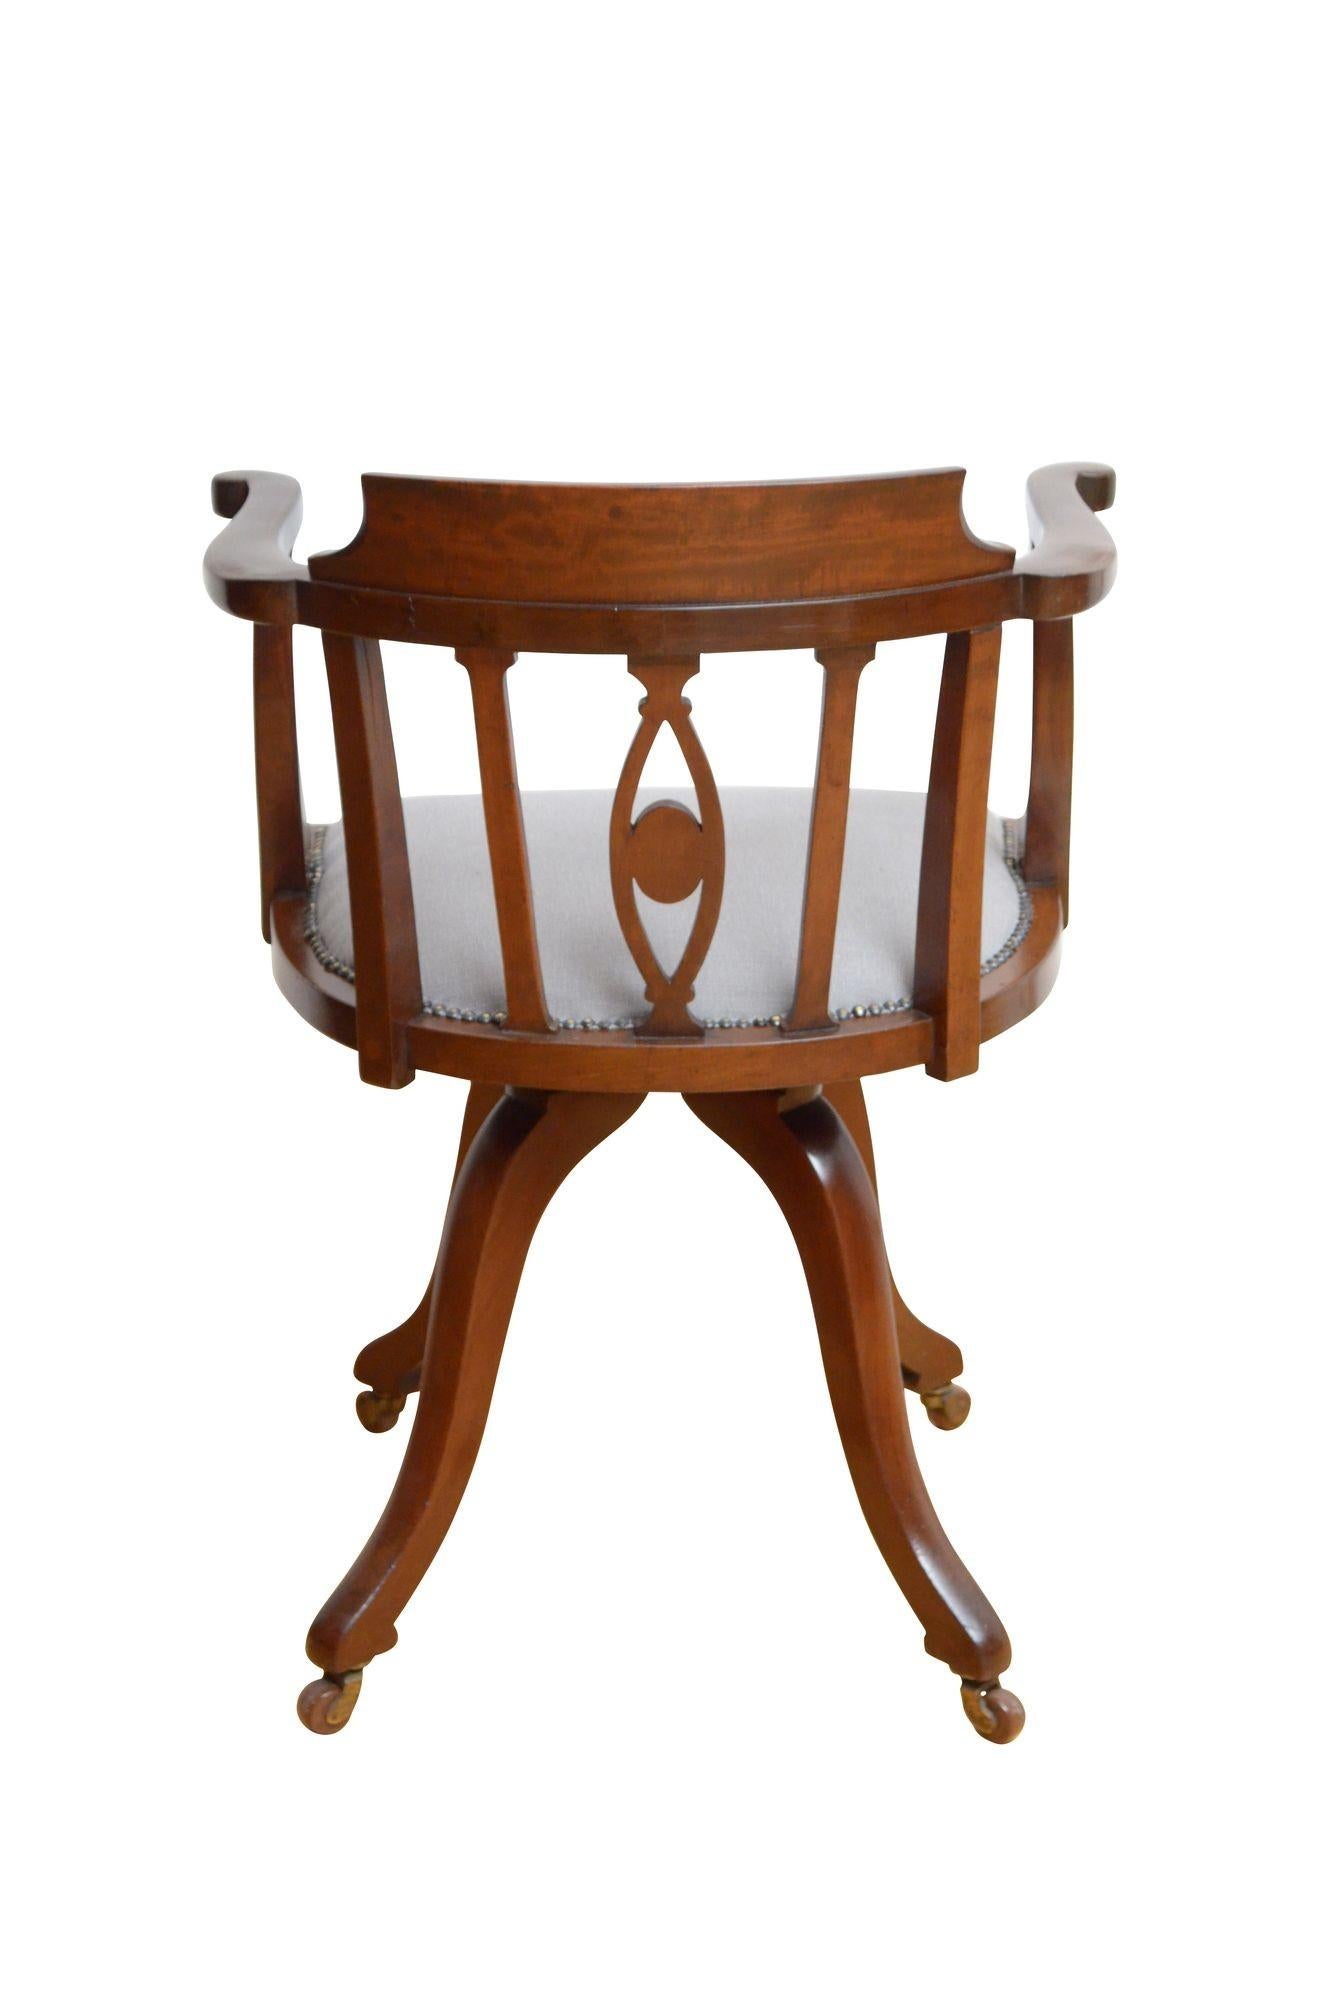 20th Century Fine English Edwardian Revolving Desk Chair For Sale